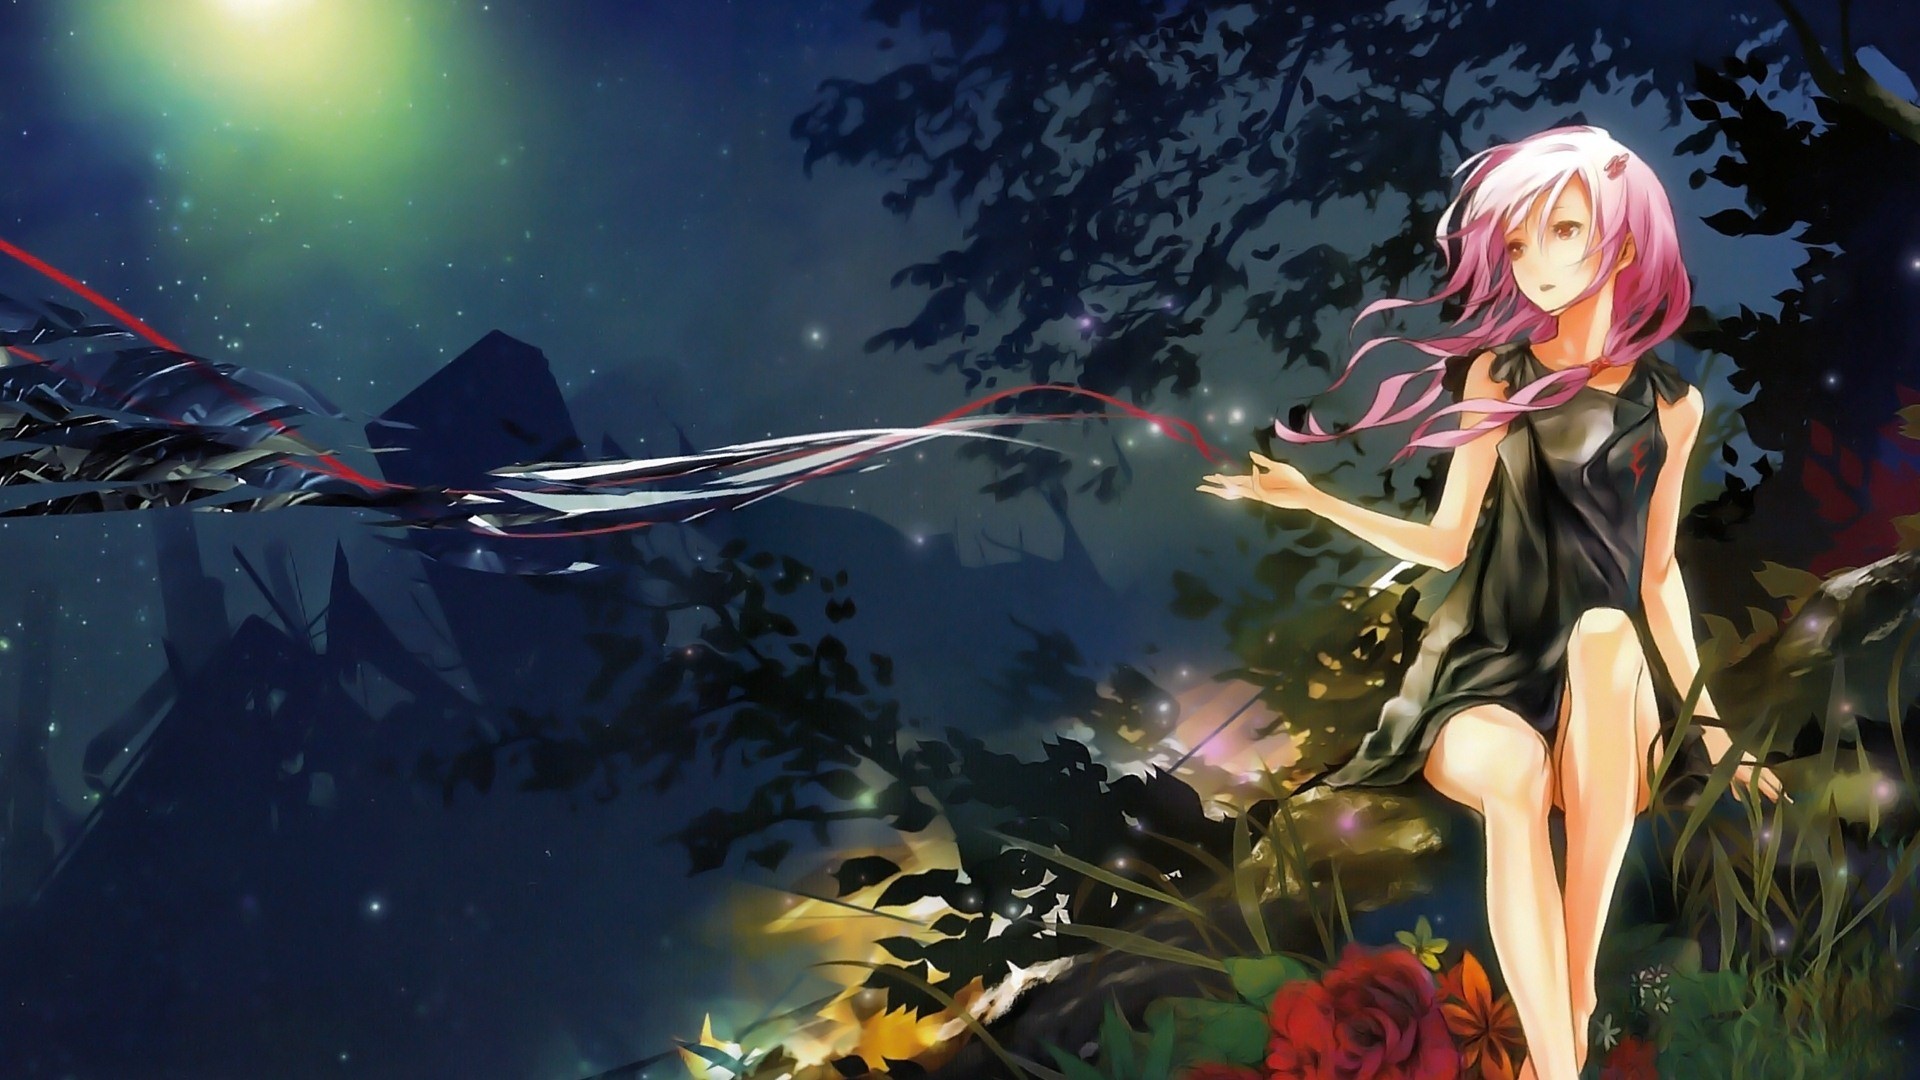 Wallpaper : Wallpaper anime, Girlfriend beta 1920x1080 - ViPro - 1617317 - HD  Wallpapers - WallHere